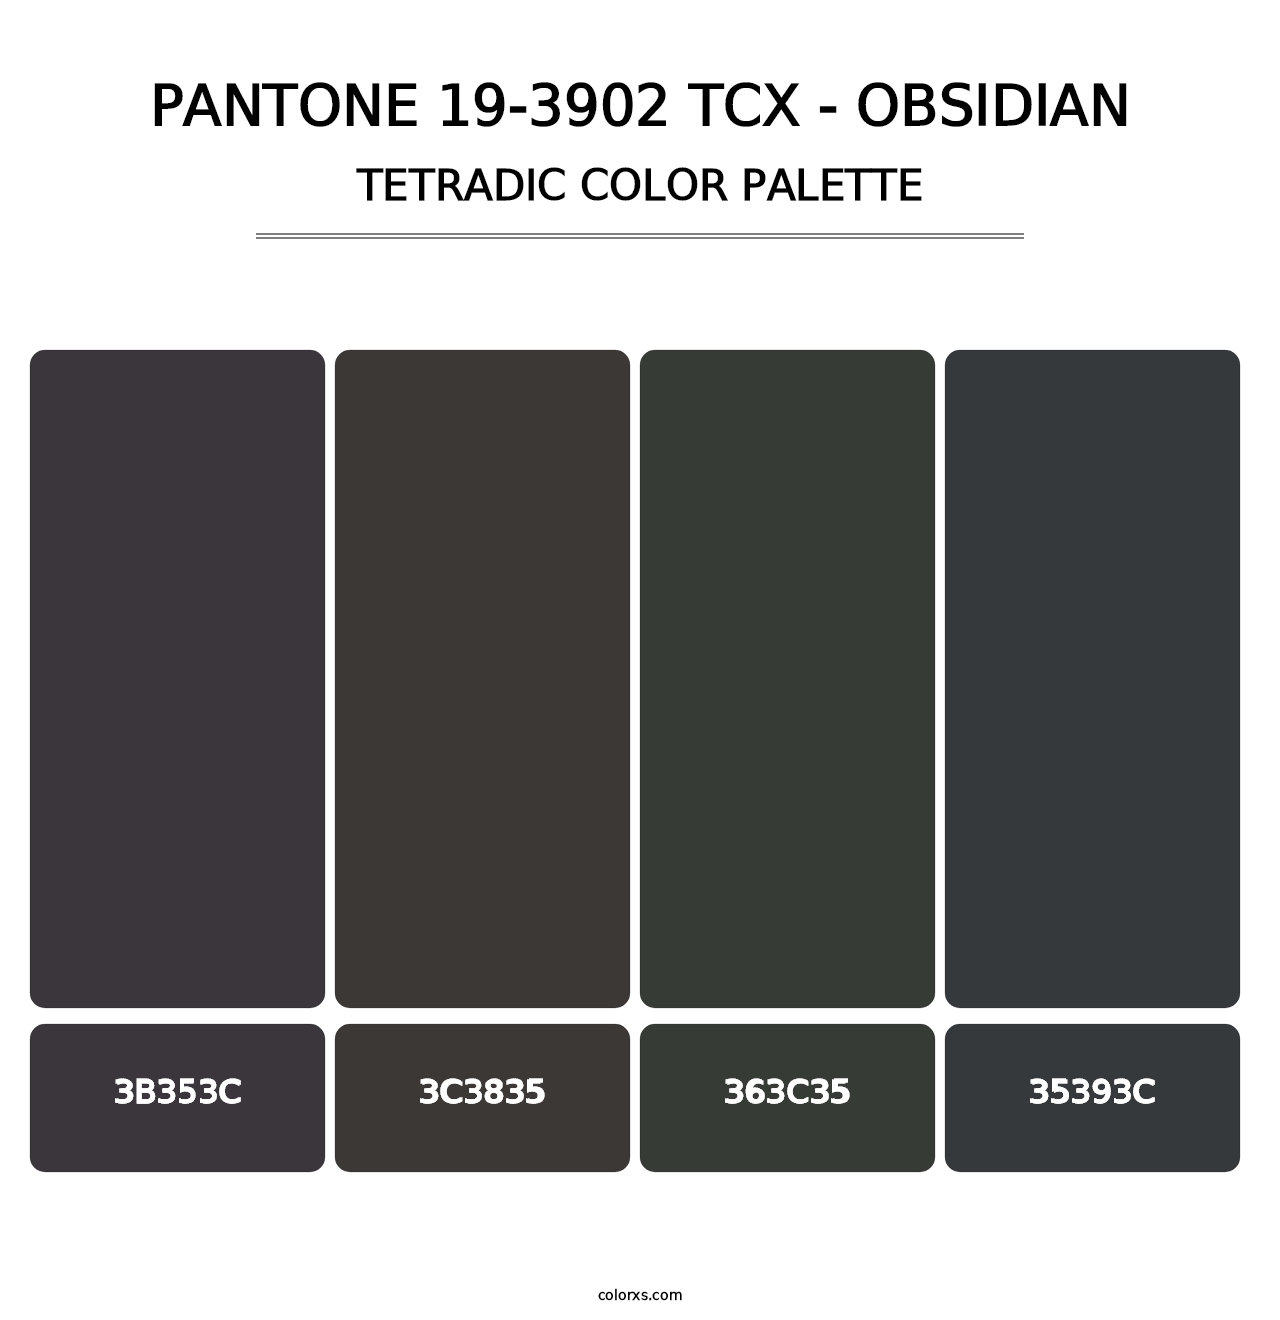 PANTONE 19-3902 TCX - Obsidian - Tetradic Color Palette